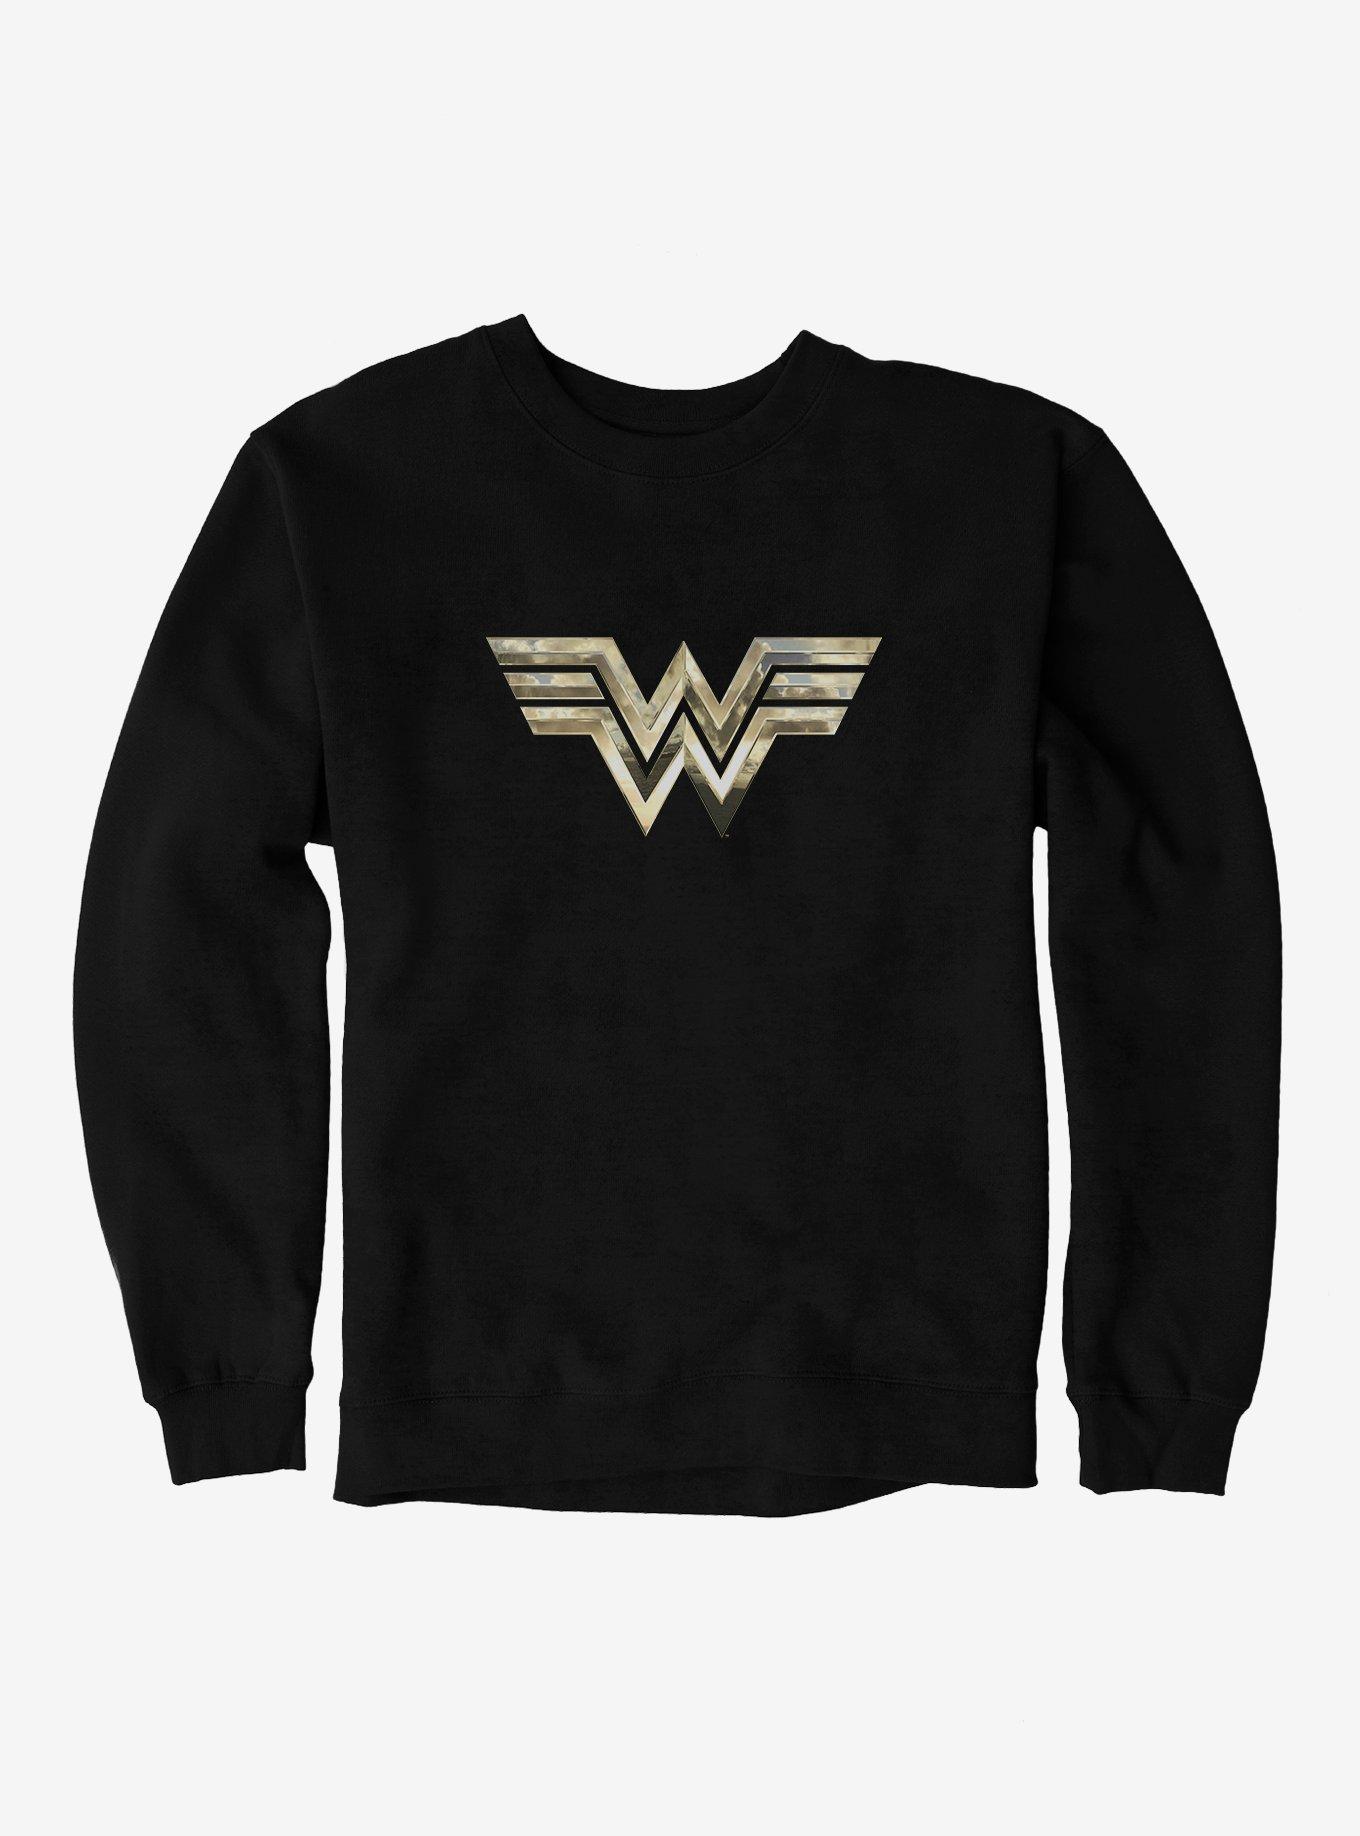 DC Comics Wonder Woman Golden Insignia Sweatshirt